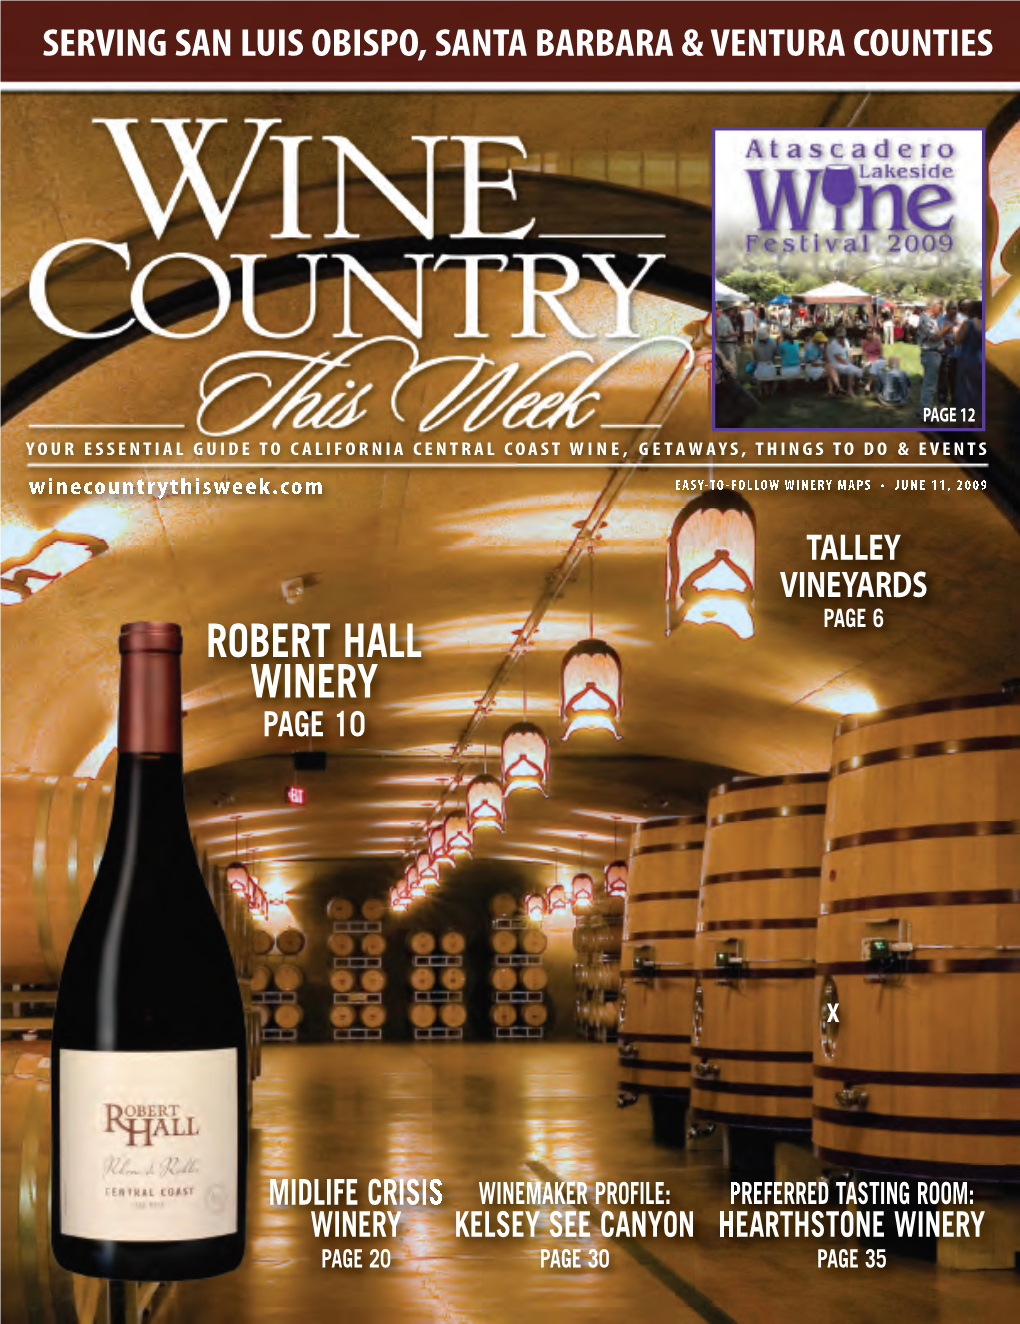 Robert Hall Winery Page 10